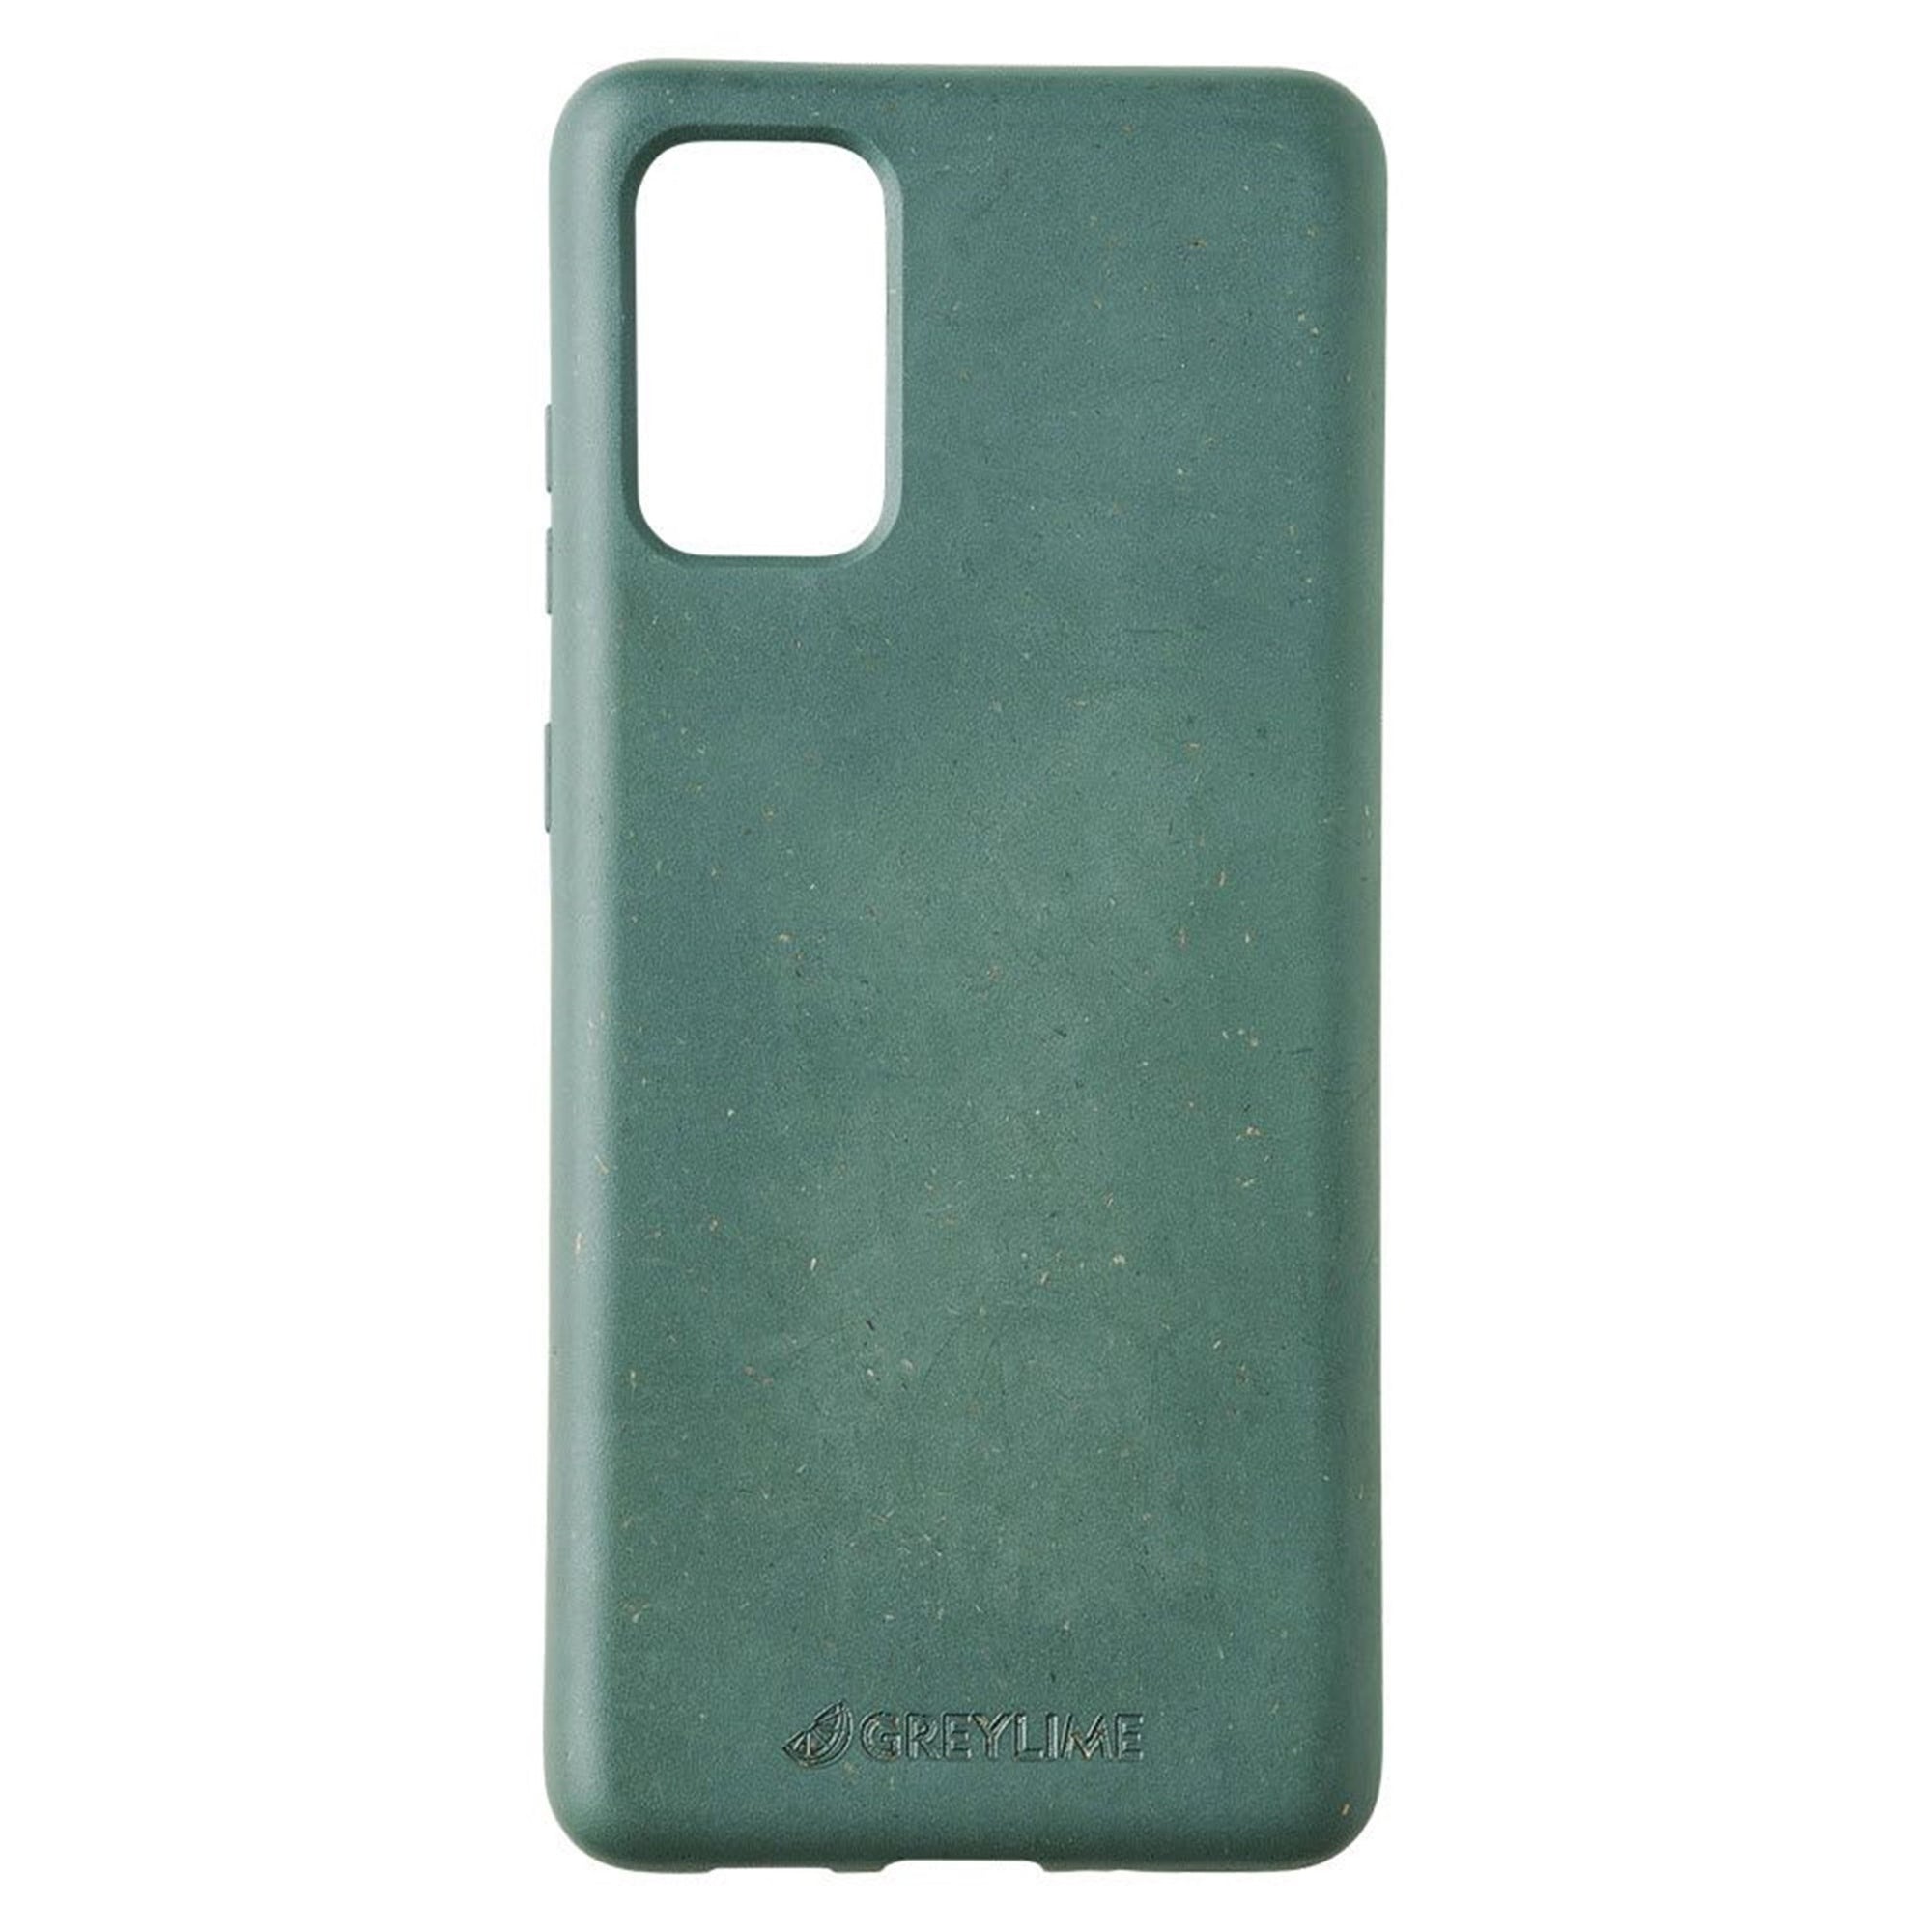 GreyLime-Samsung-Galaxy-S20-Biodegradable-Cover-Dark-Green-COSAM20P04-V3.jpg